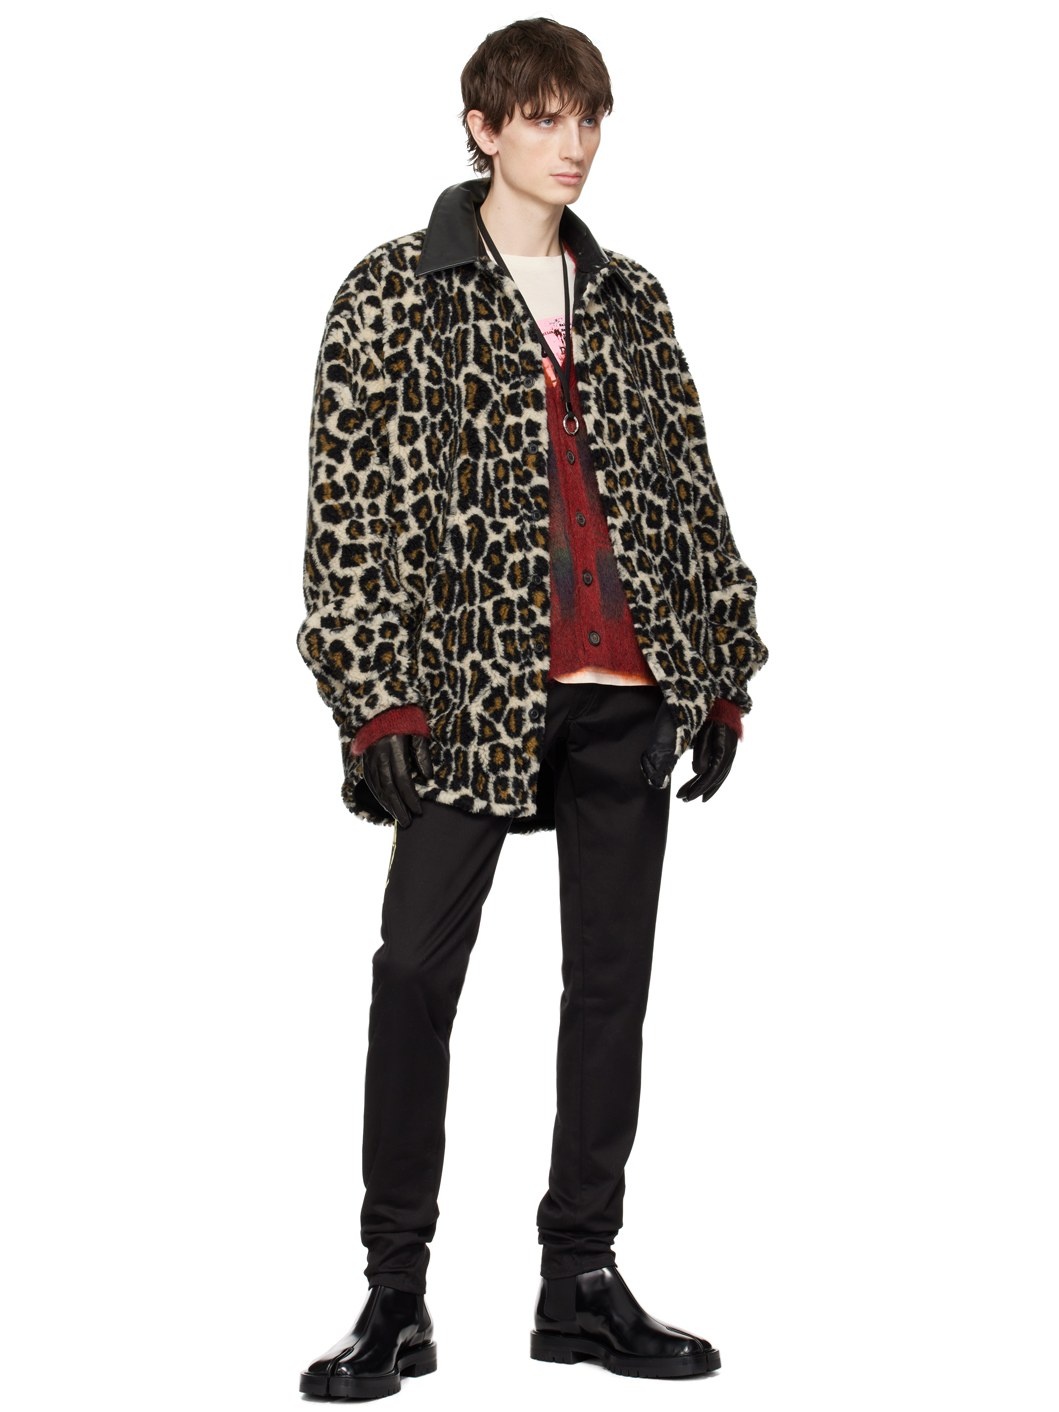 Black & Beige Leopard Print Jacket - 4